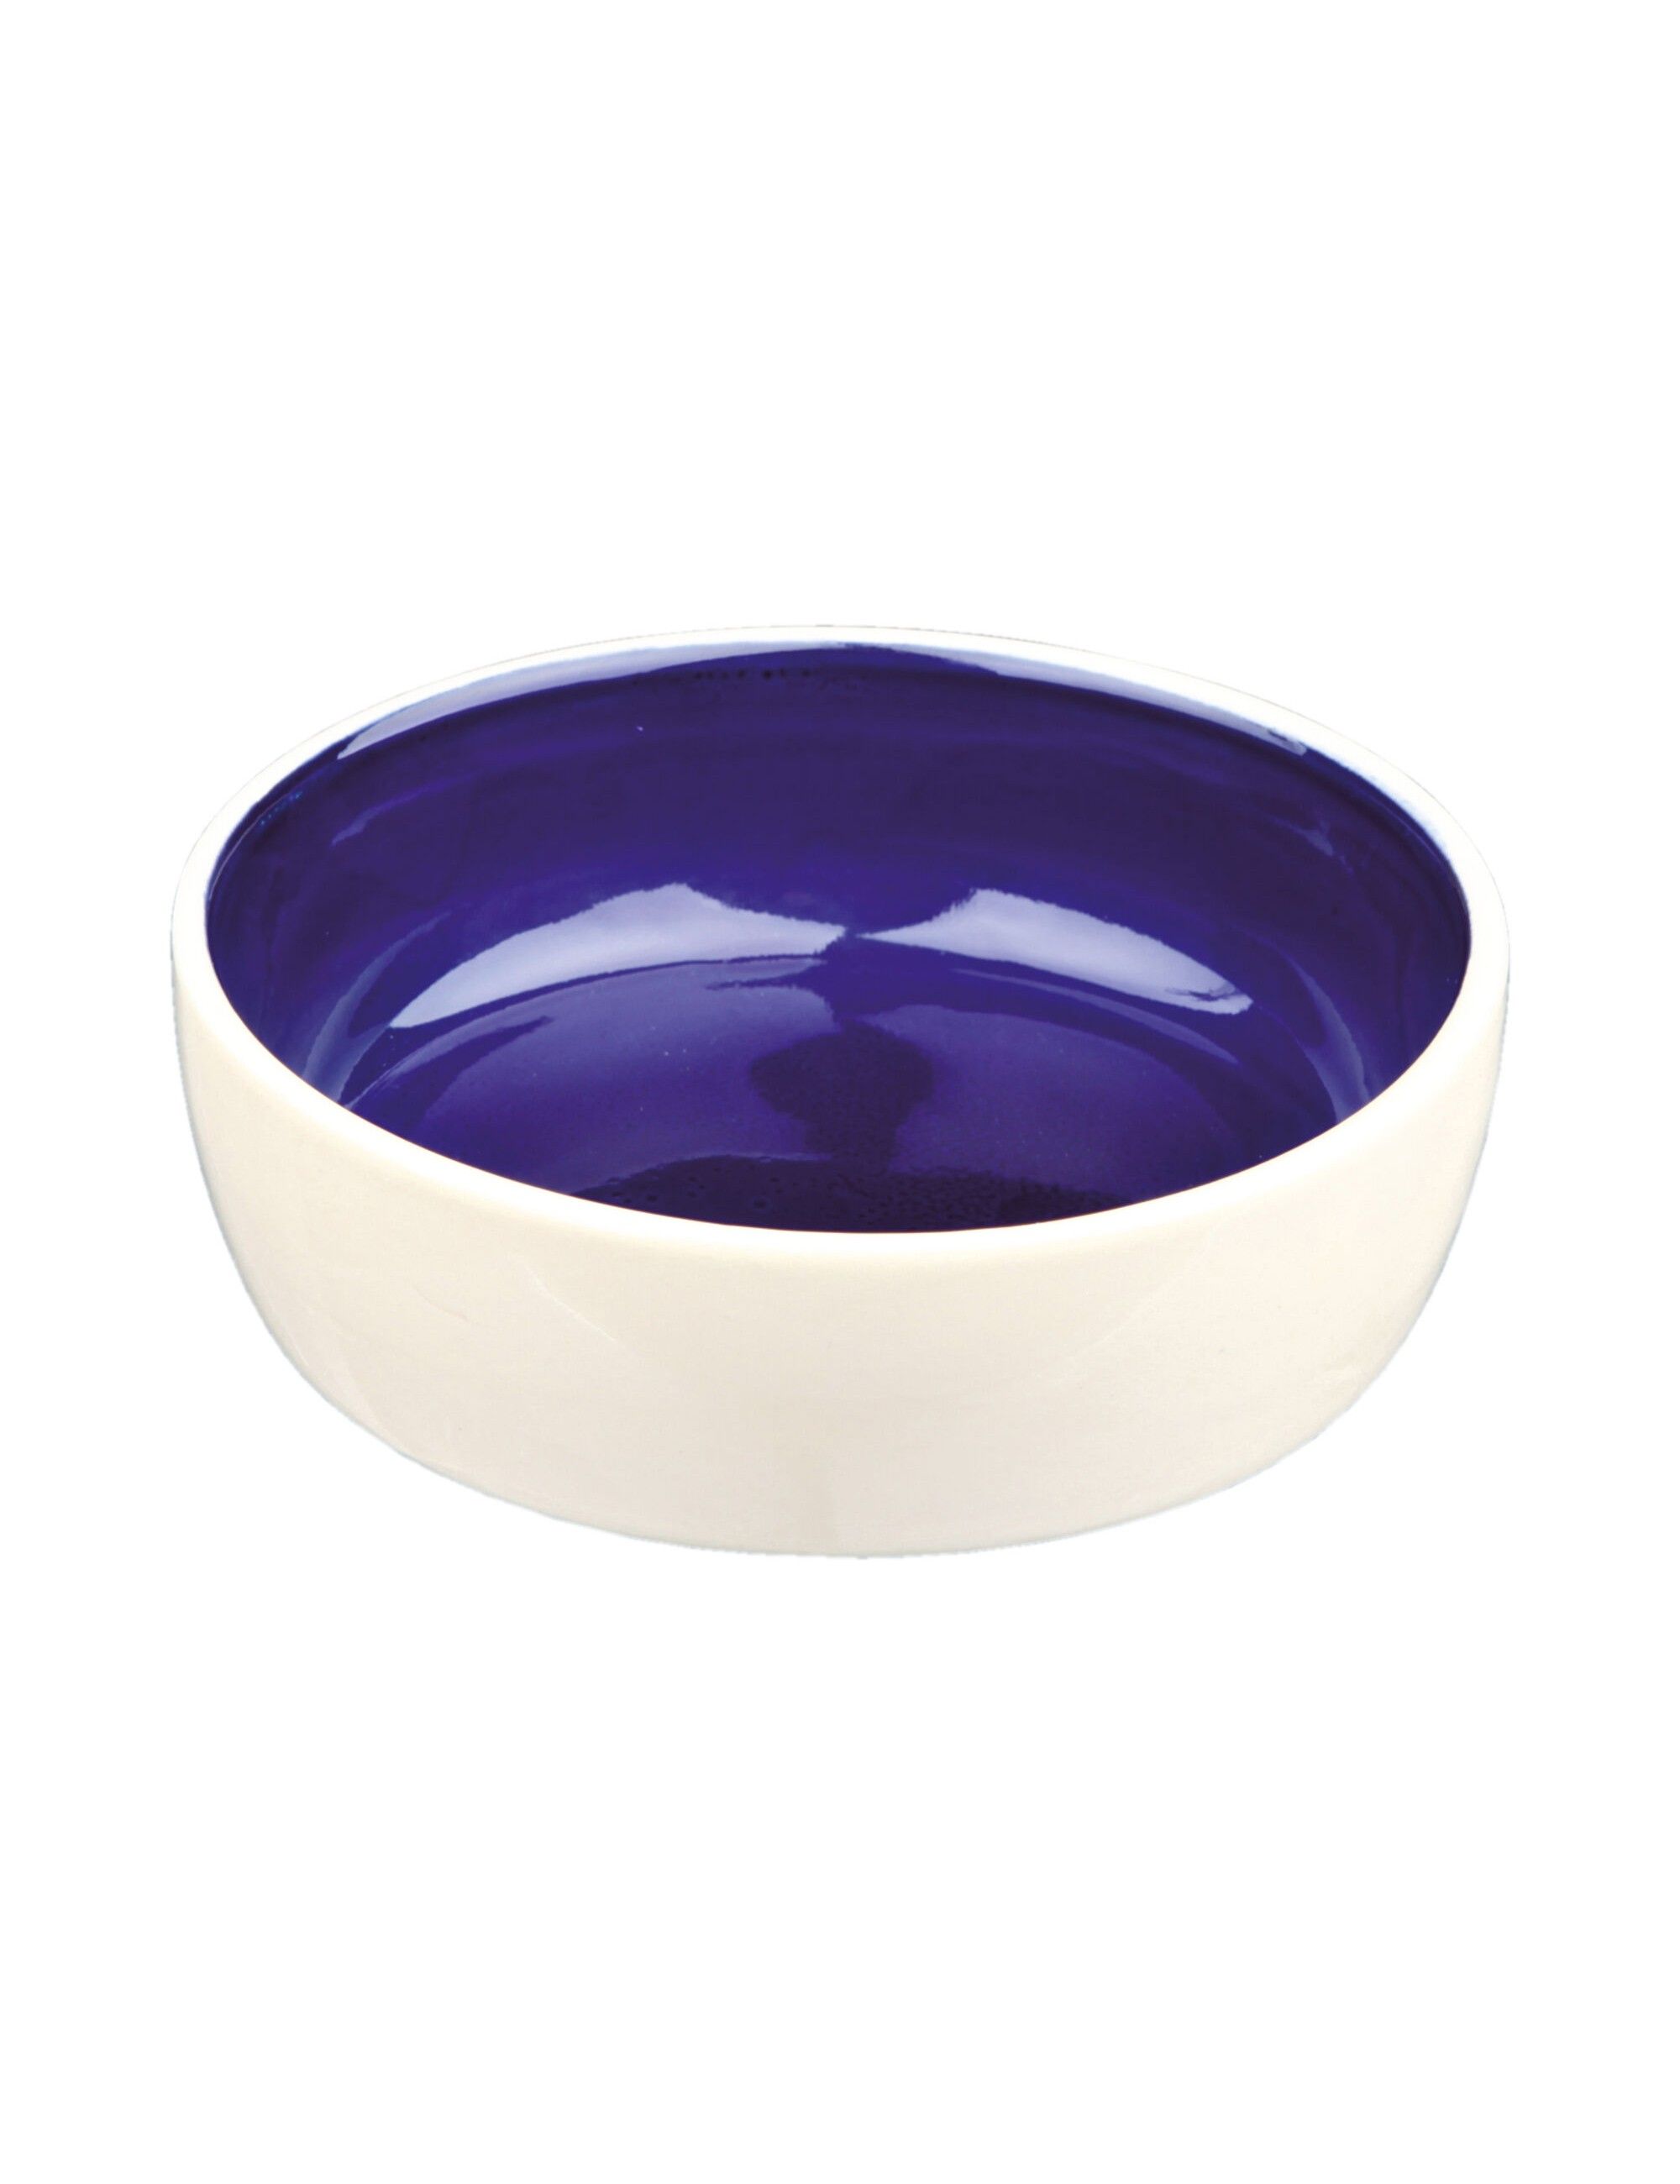 TRIXIE - Cuenco de cerámica crema/azul